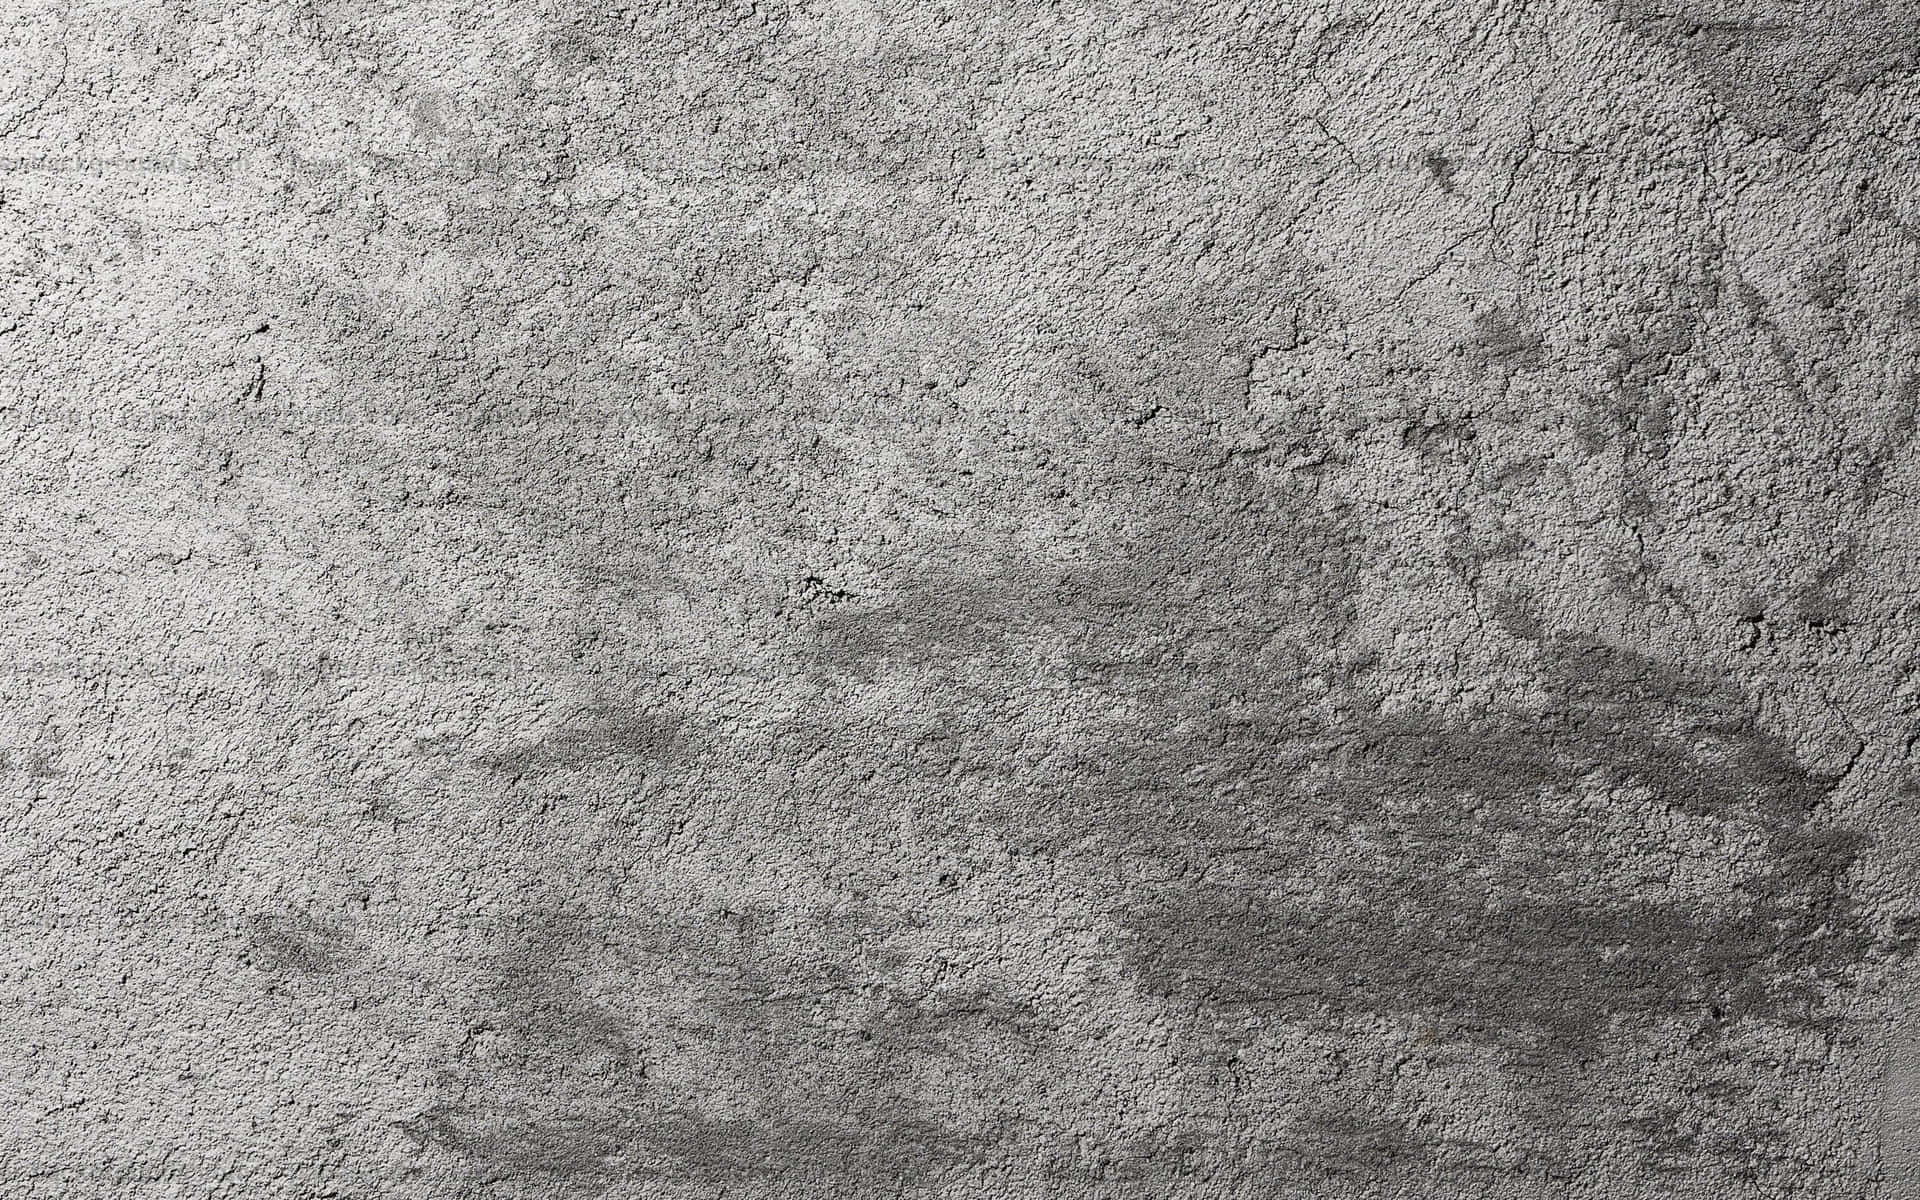 Imagende Textura De Concreto Gris Fantasma